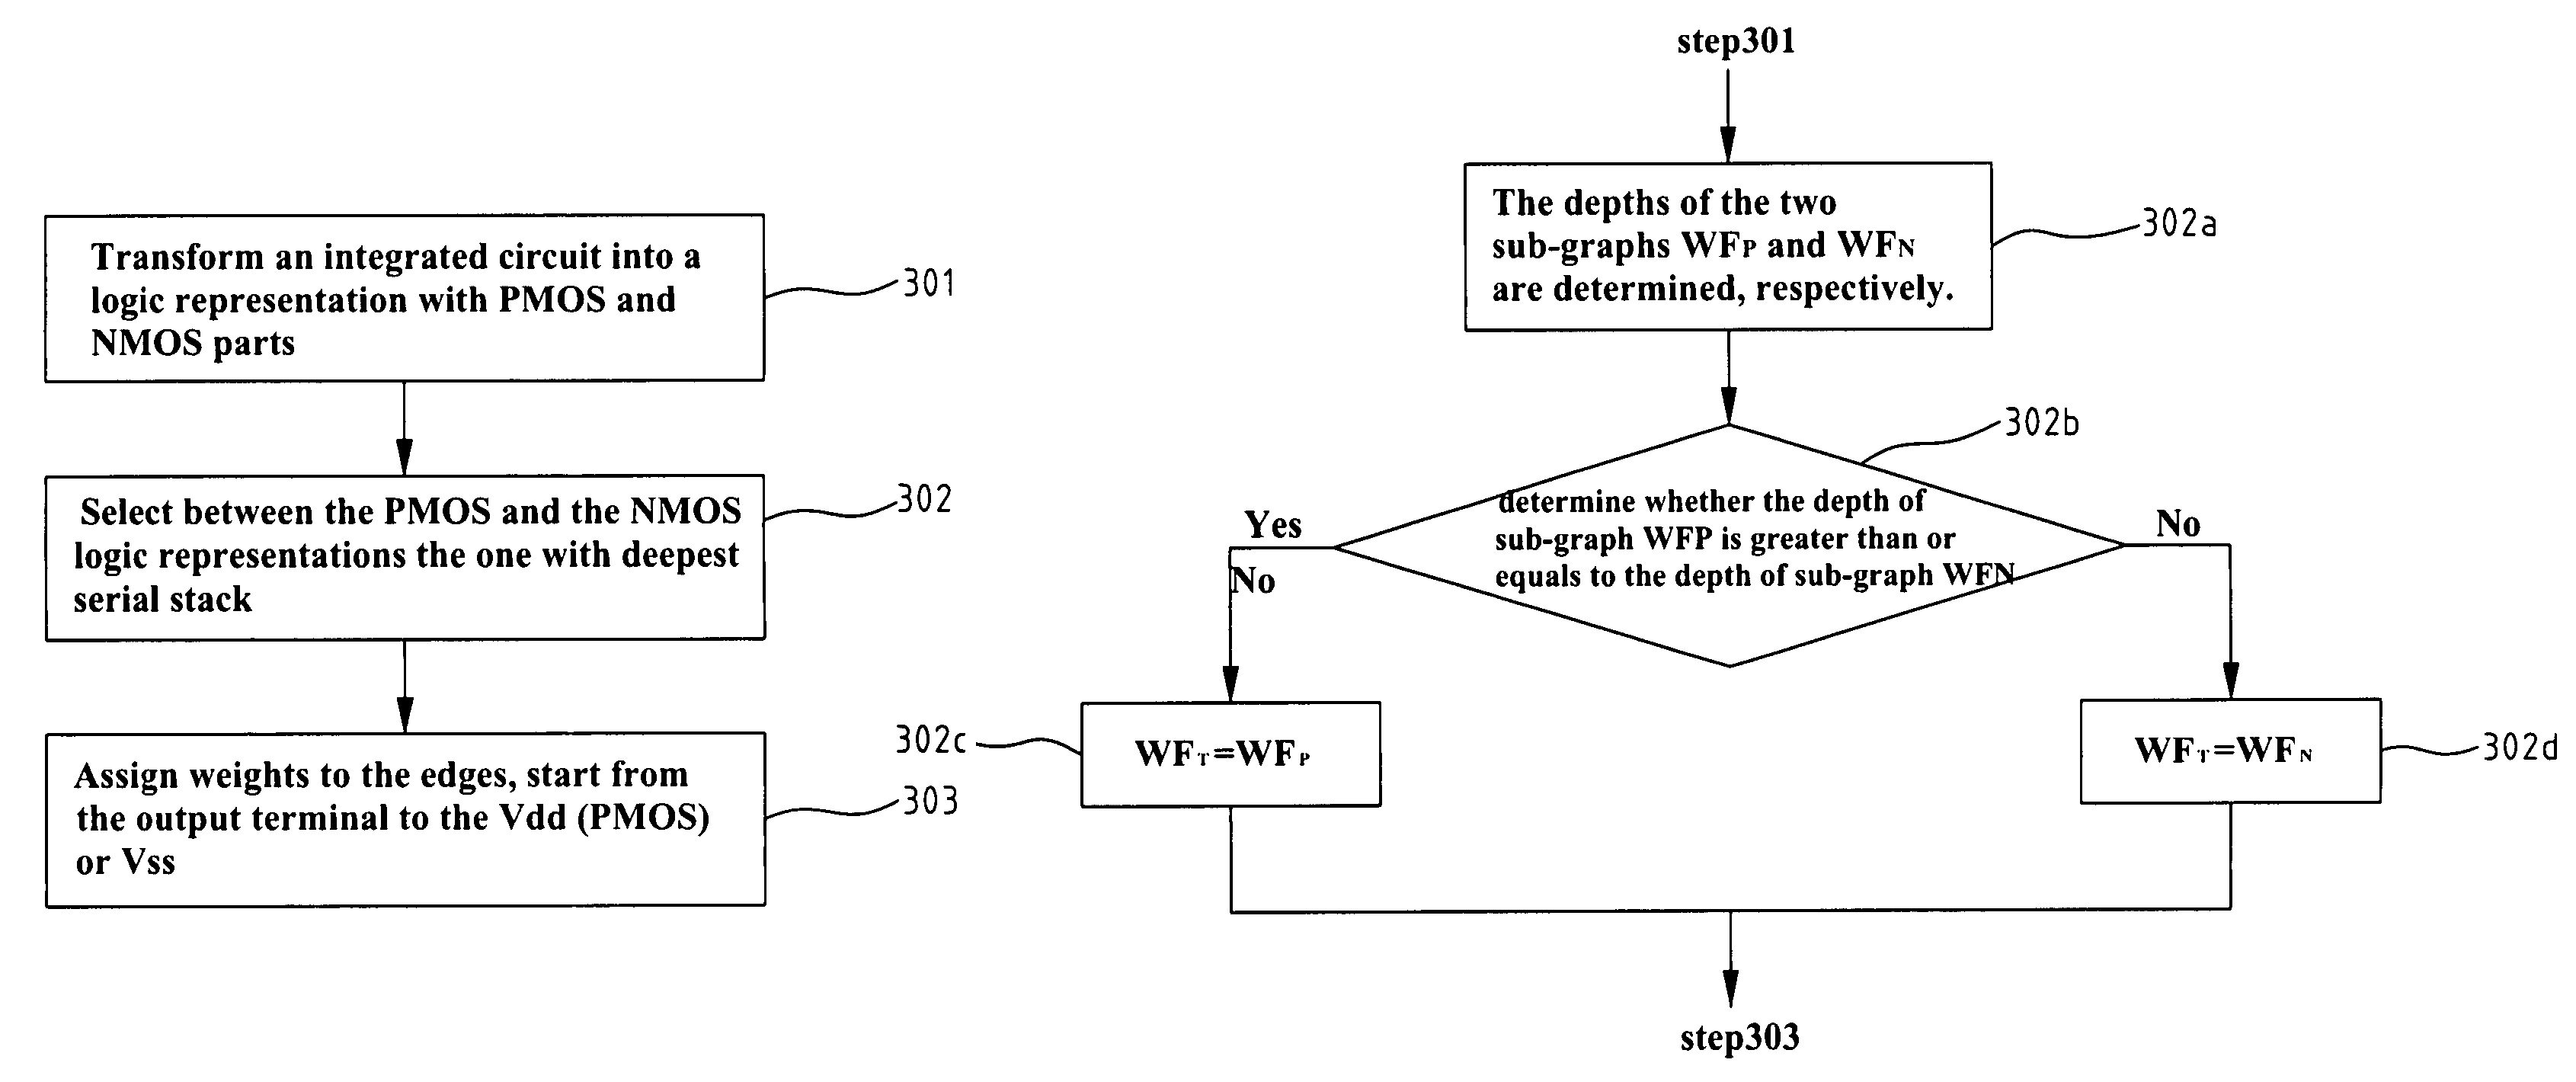 Method for generating minimal leakage current input vector using heuristics